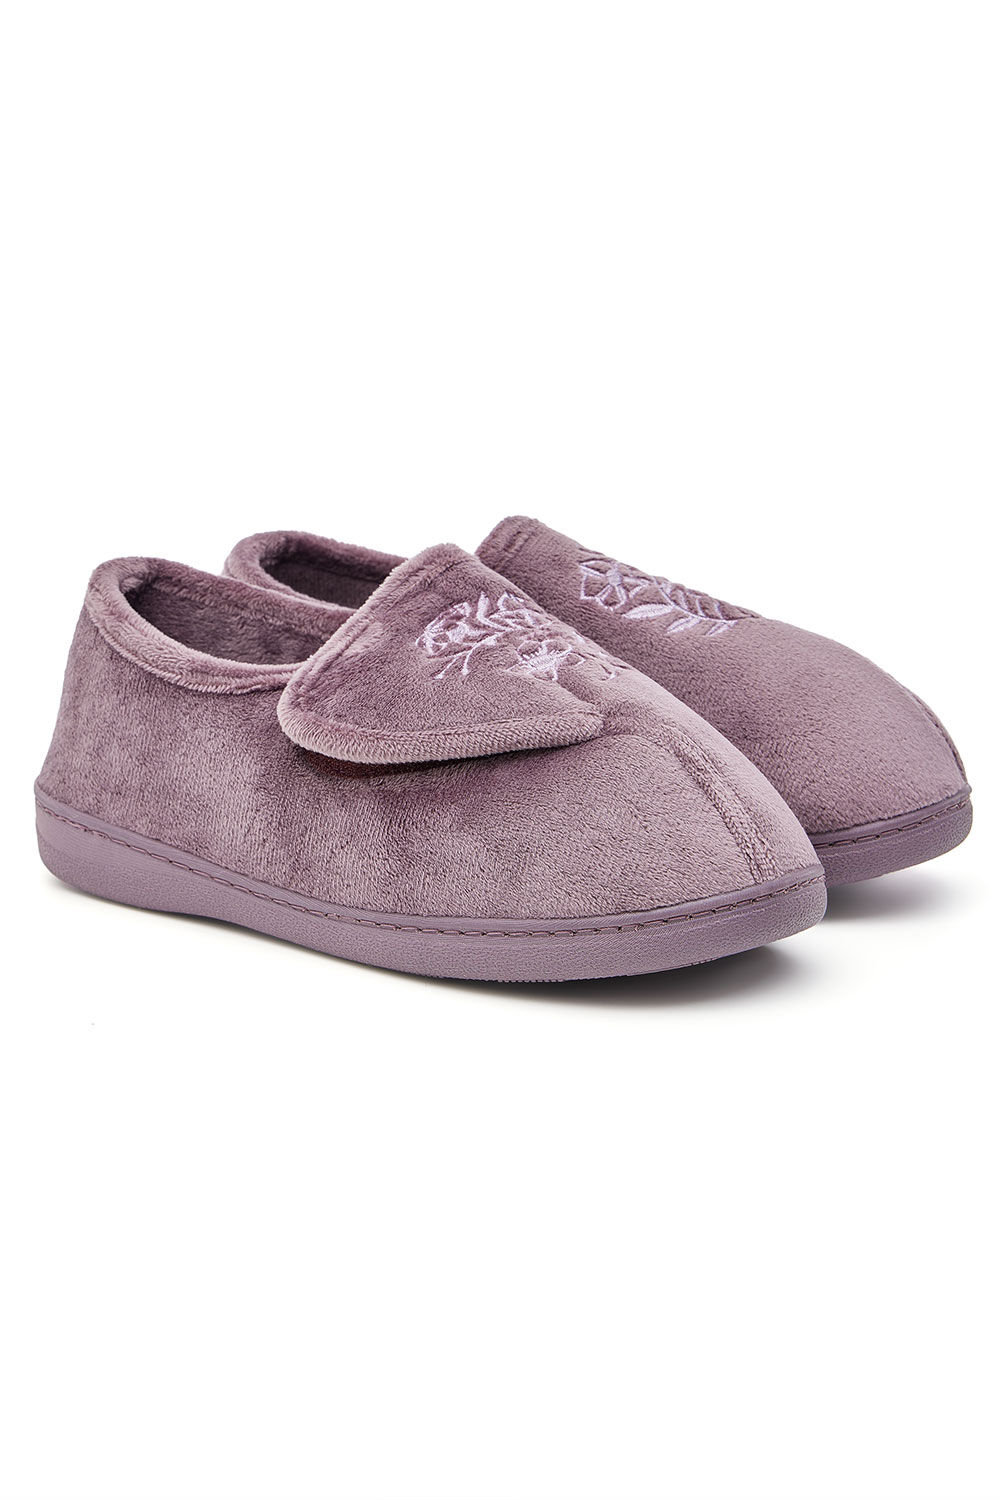 bonmarche plum touch fasten velour slippers, size: 3